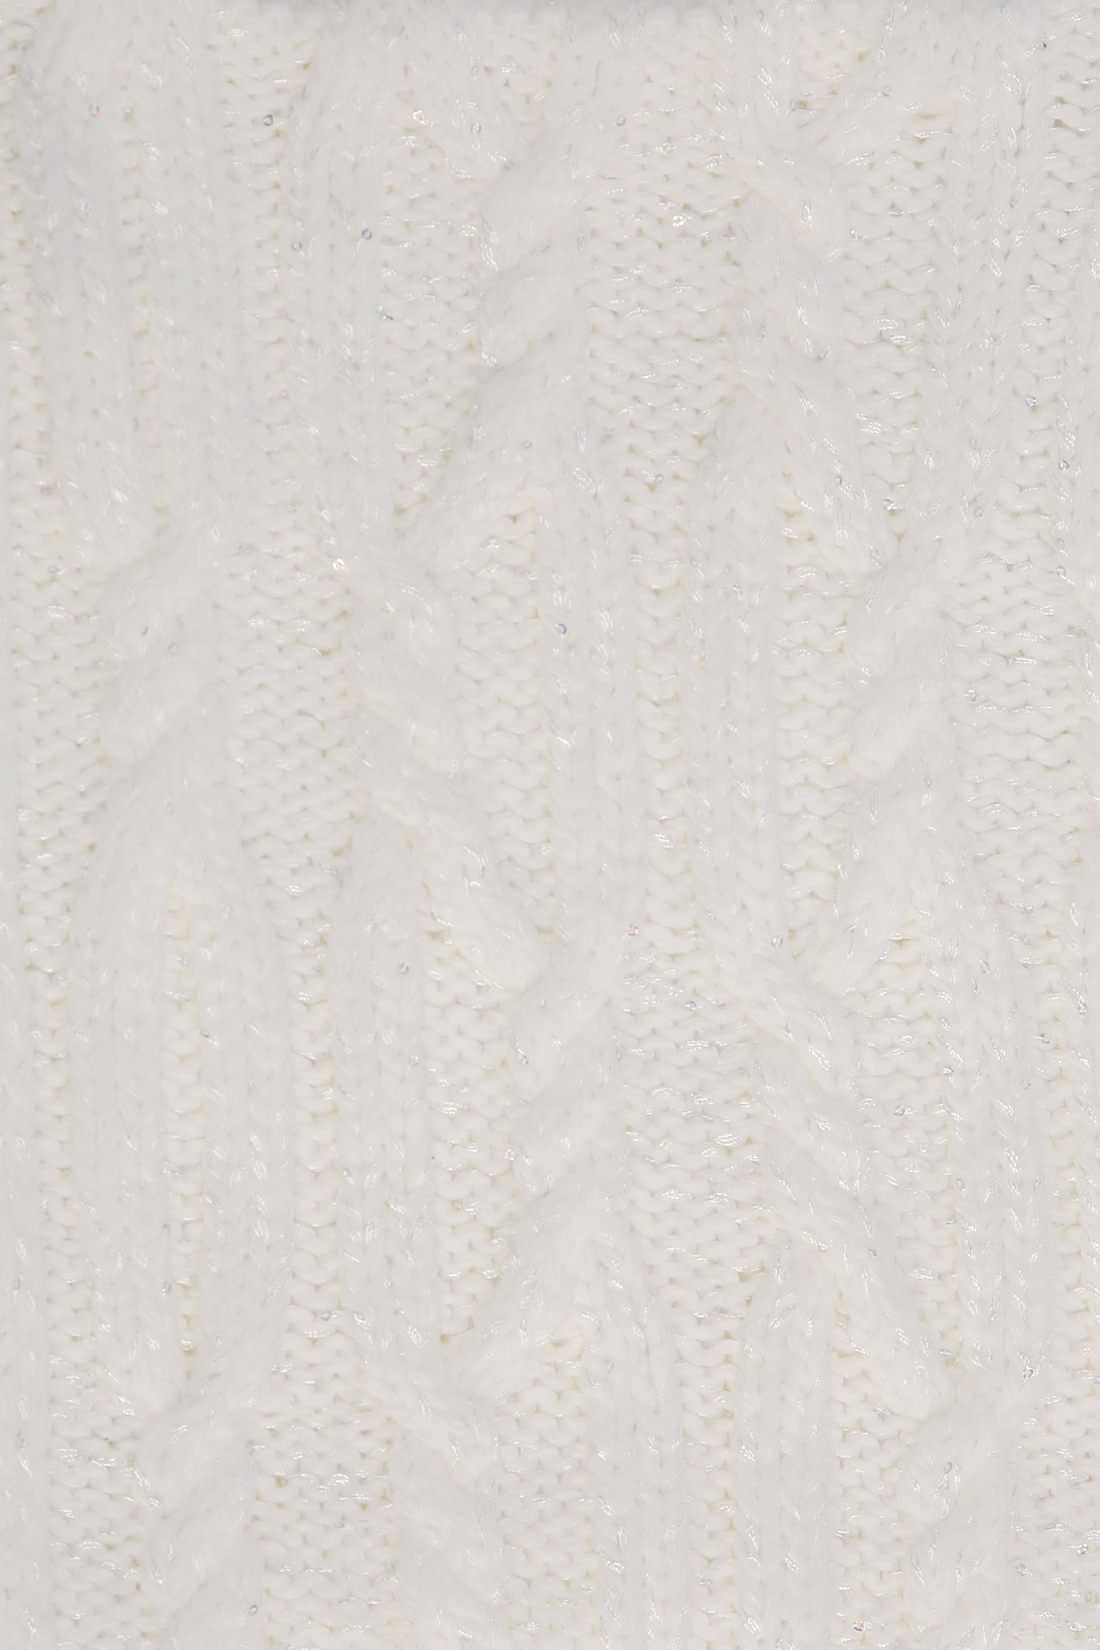 Шарф-снуд с аранским узором (арт. baon B358563), размер Без/раз, цвет белый Шарф-снуд с аранским узором (арт. baon B358563) - фото 3